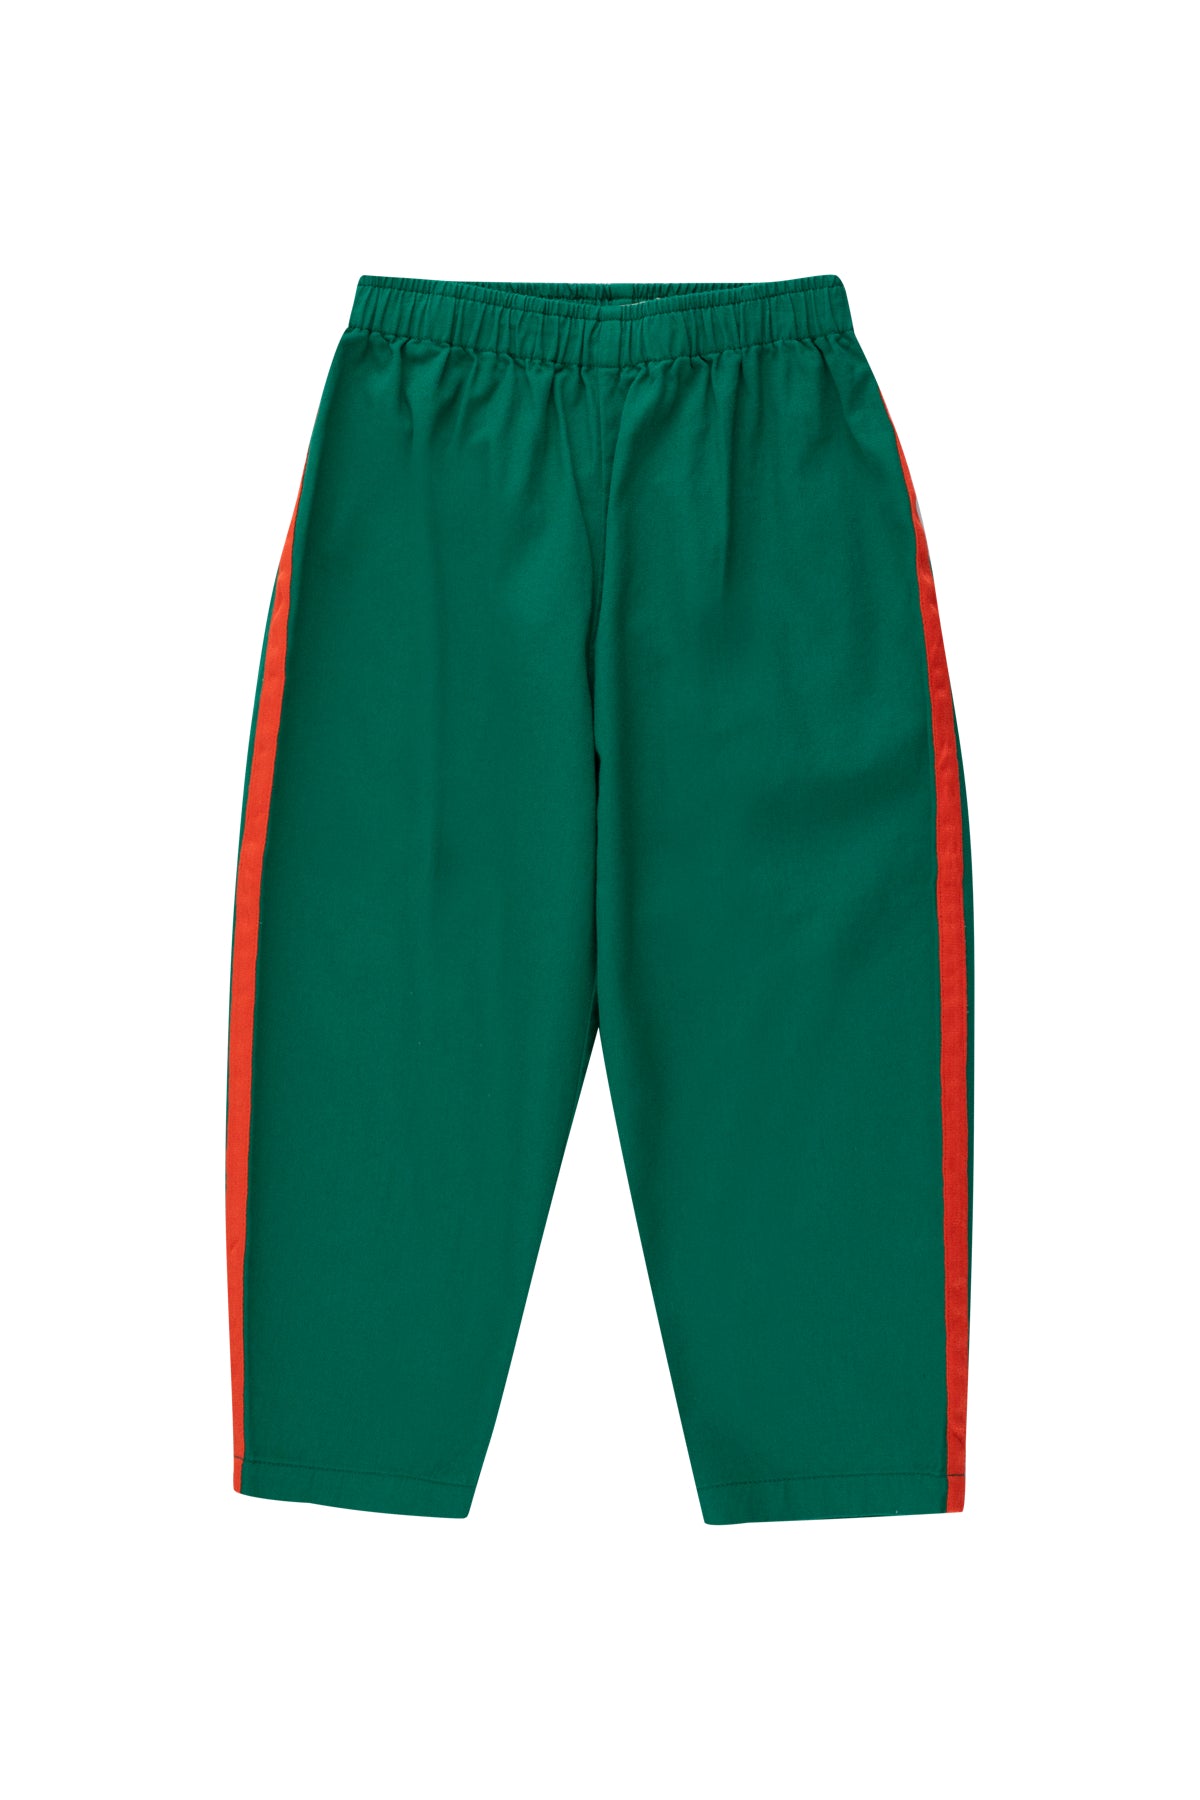 Tiny Cottons - barrel pants - deep green